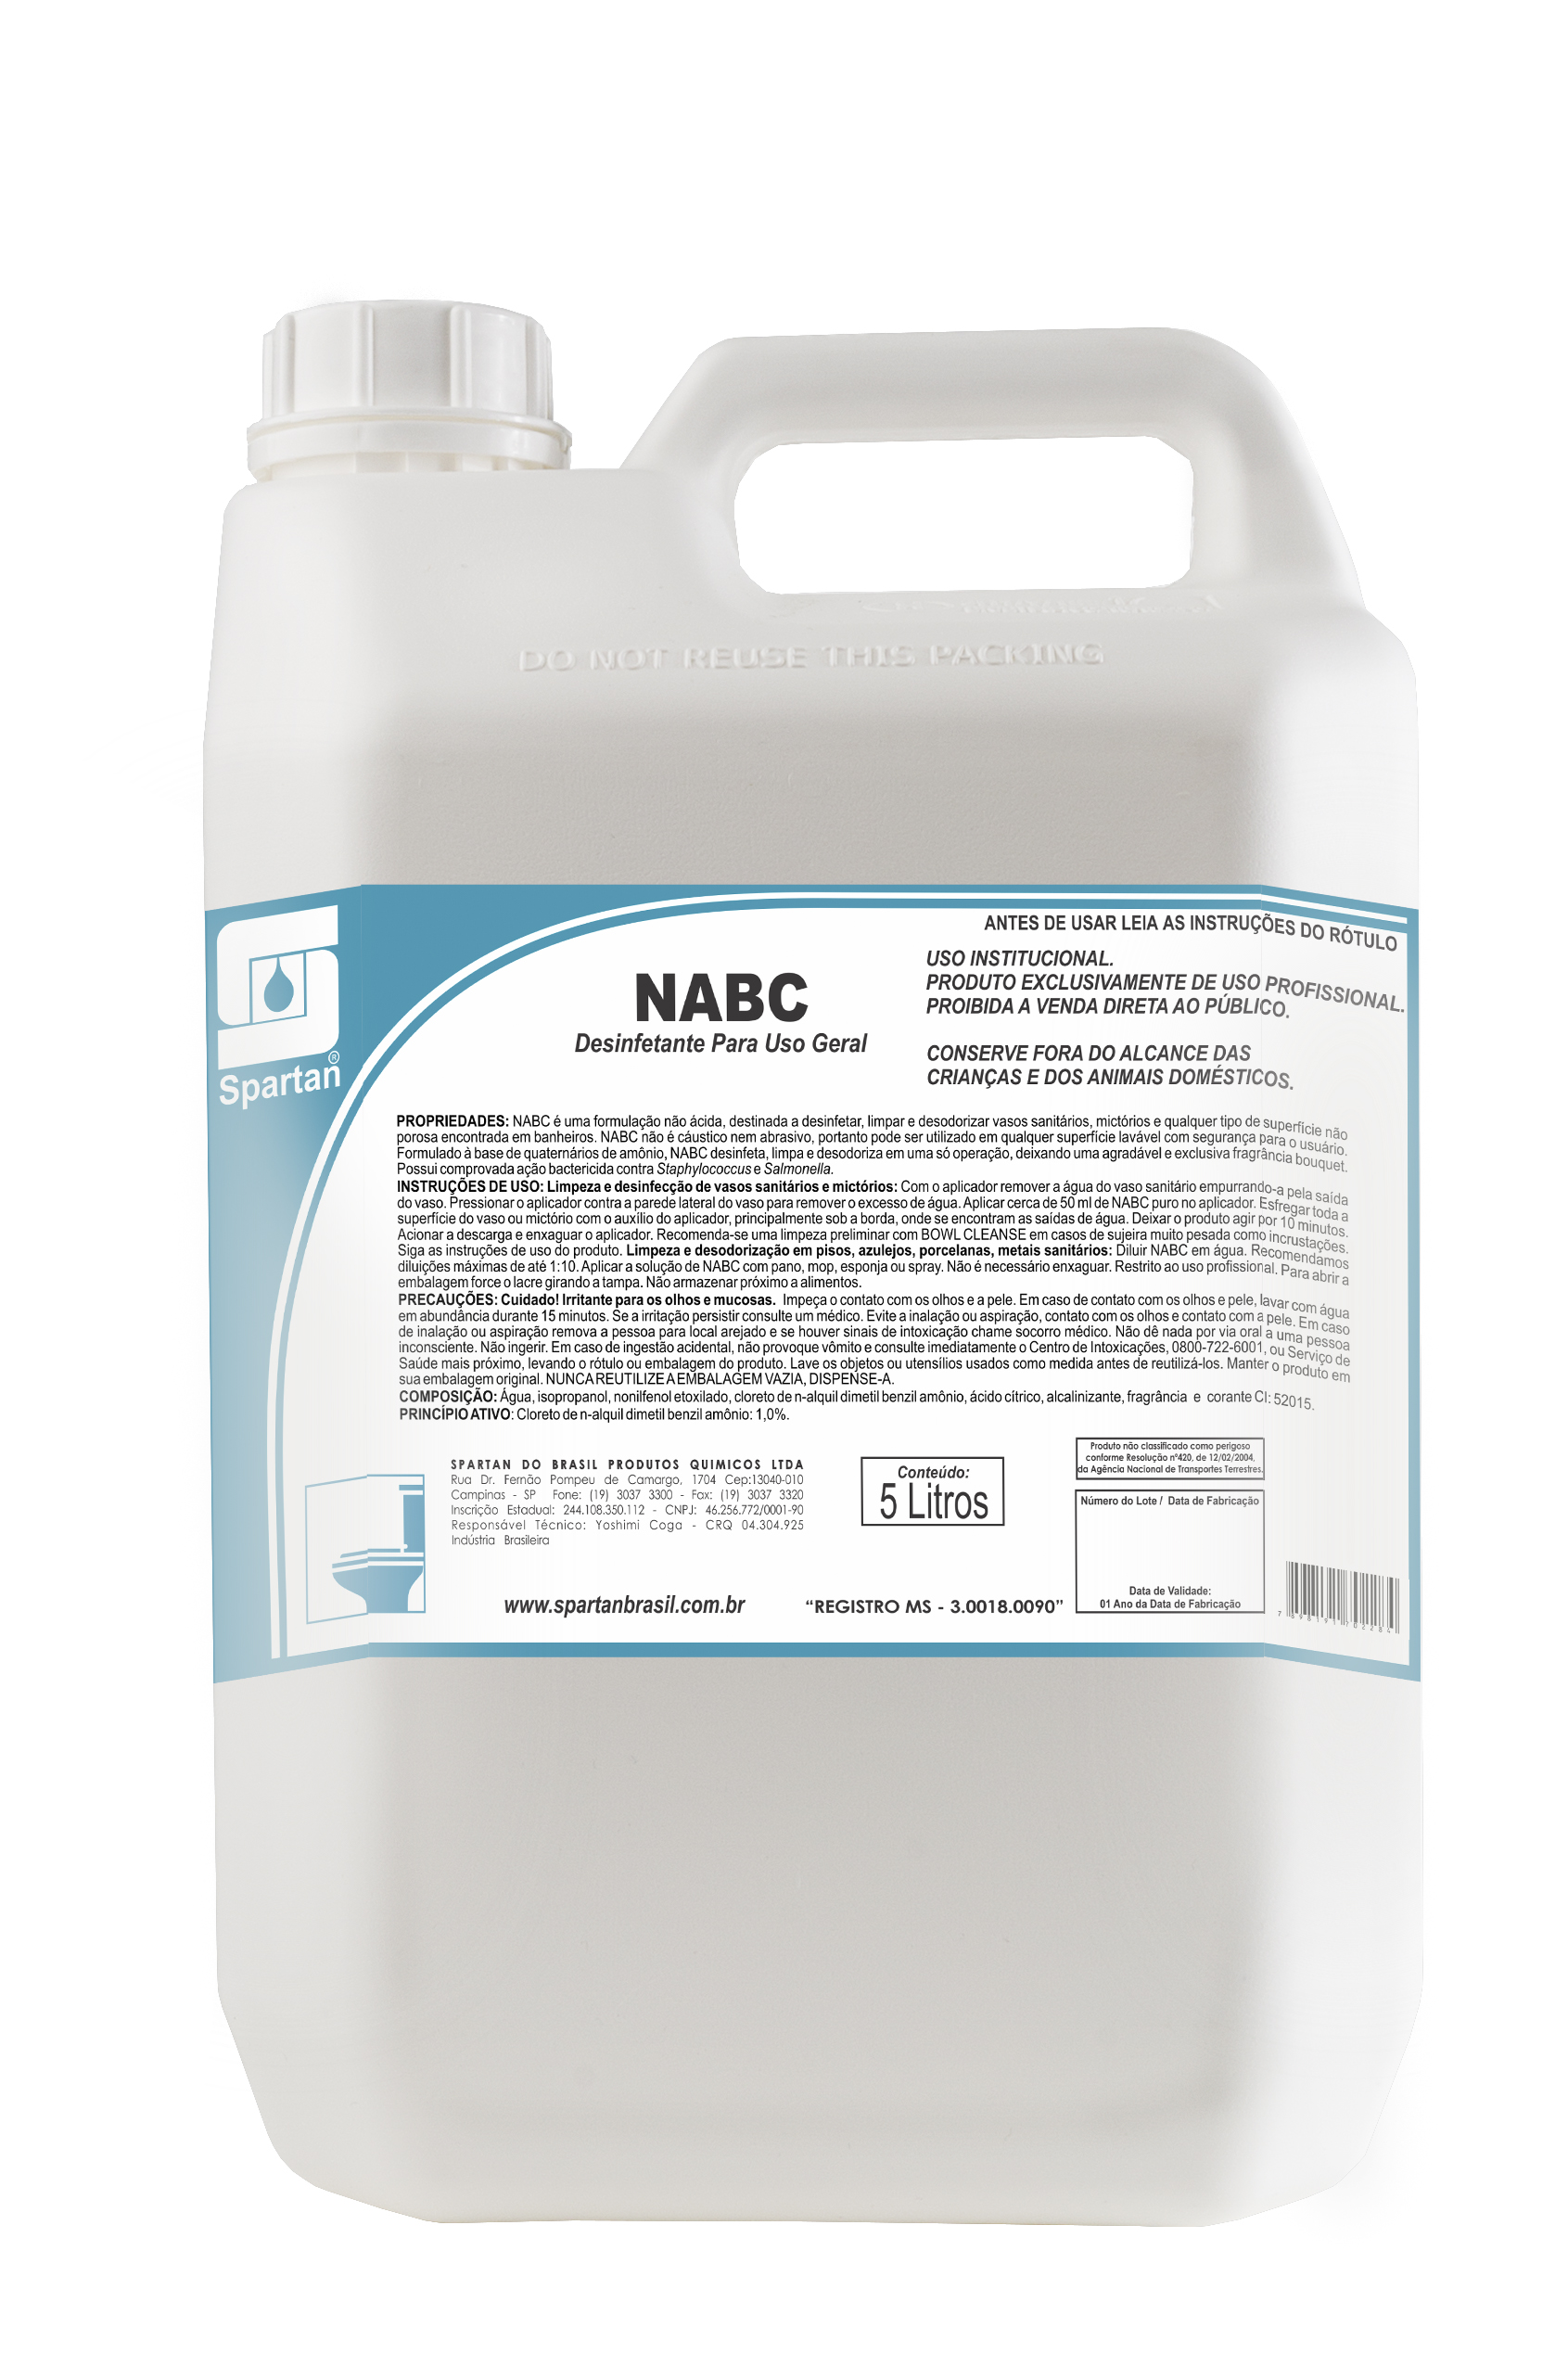 Imagem ilustrativa do produto: NABC